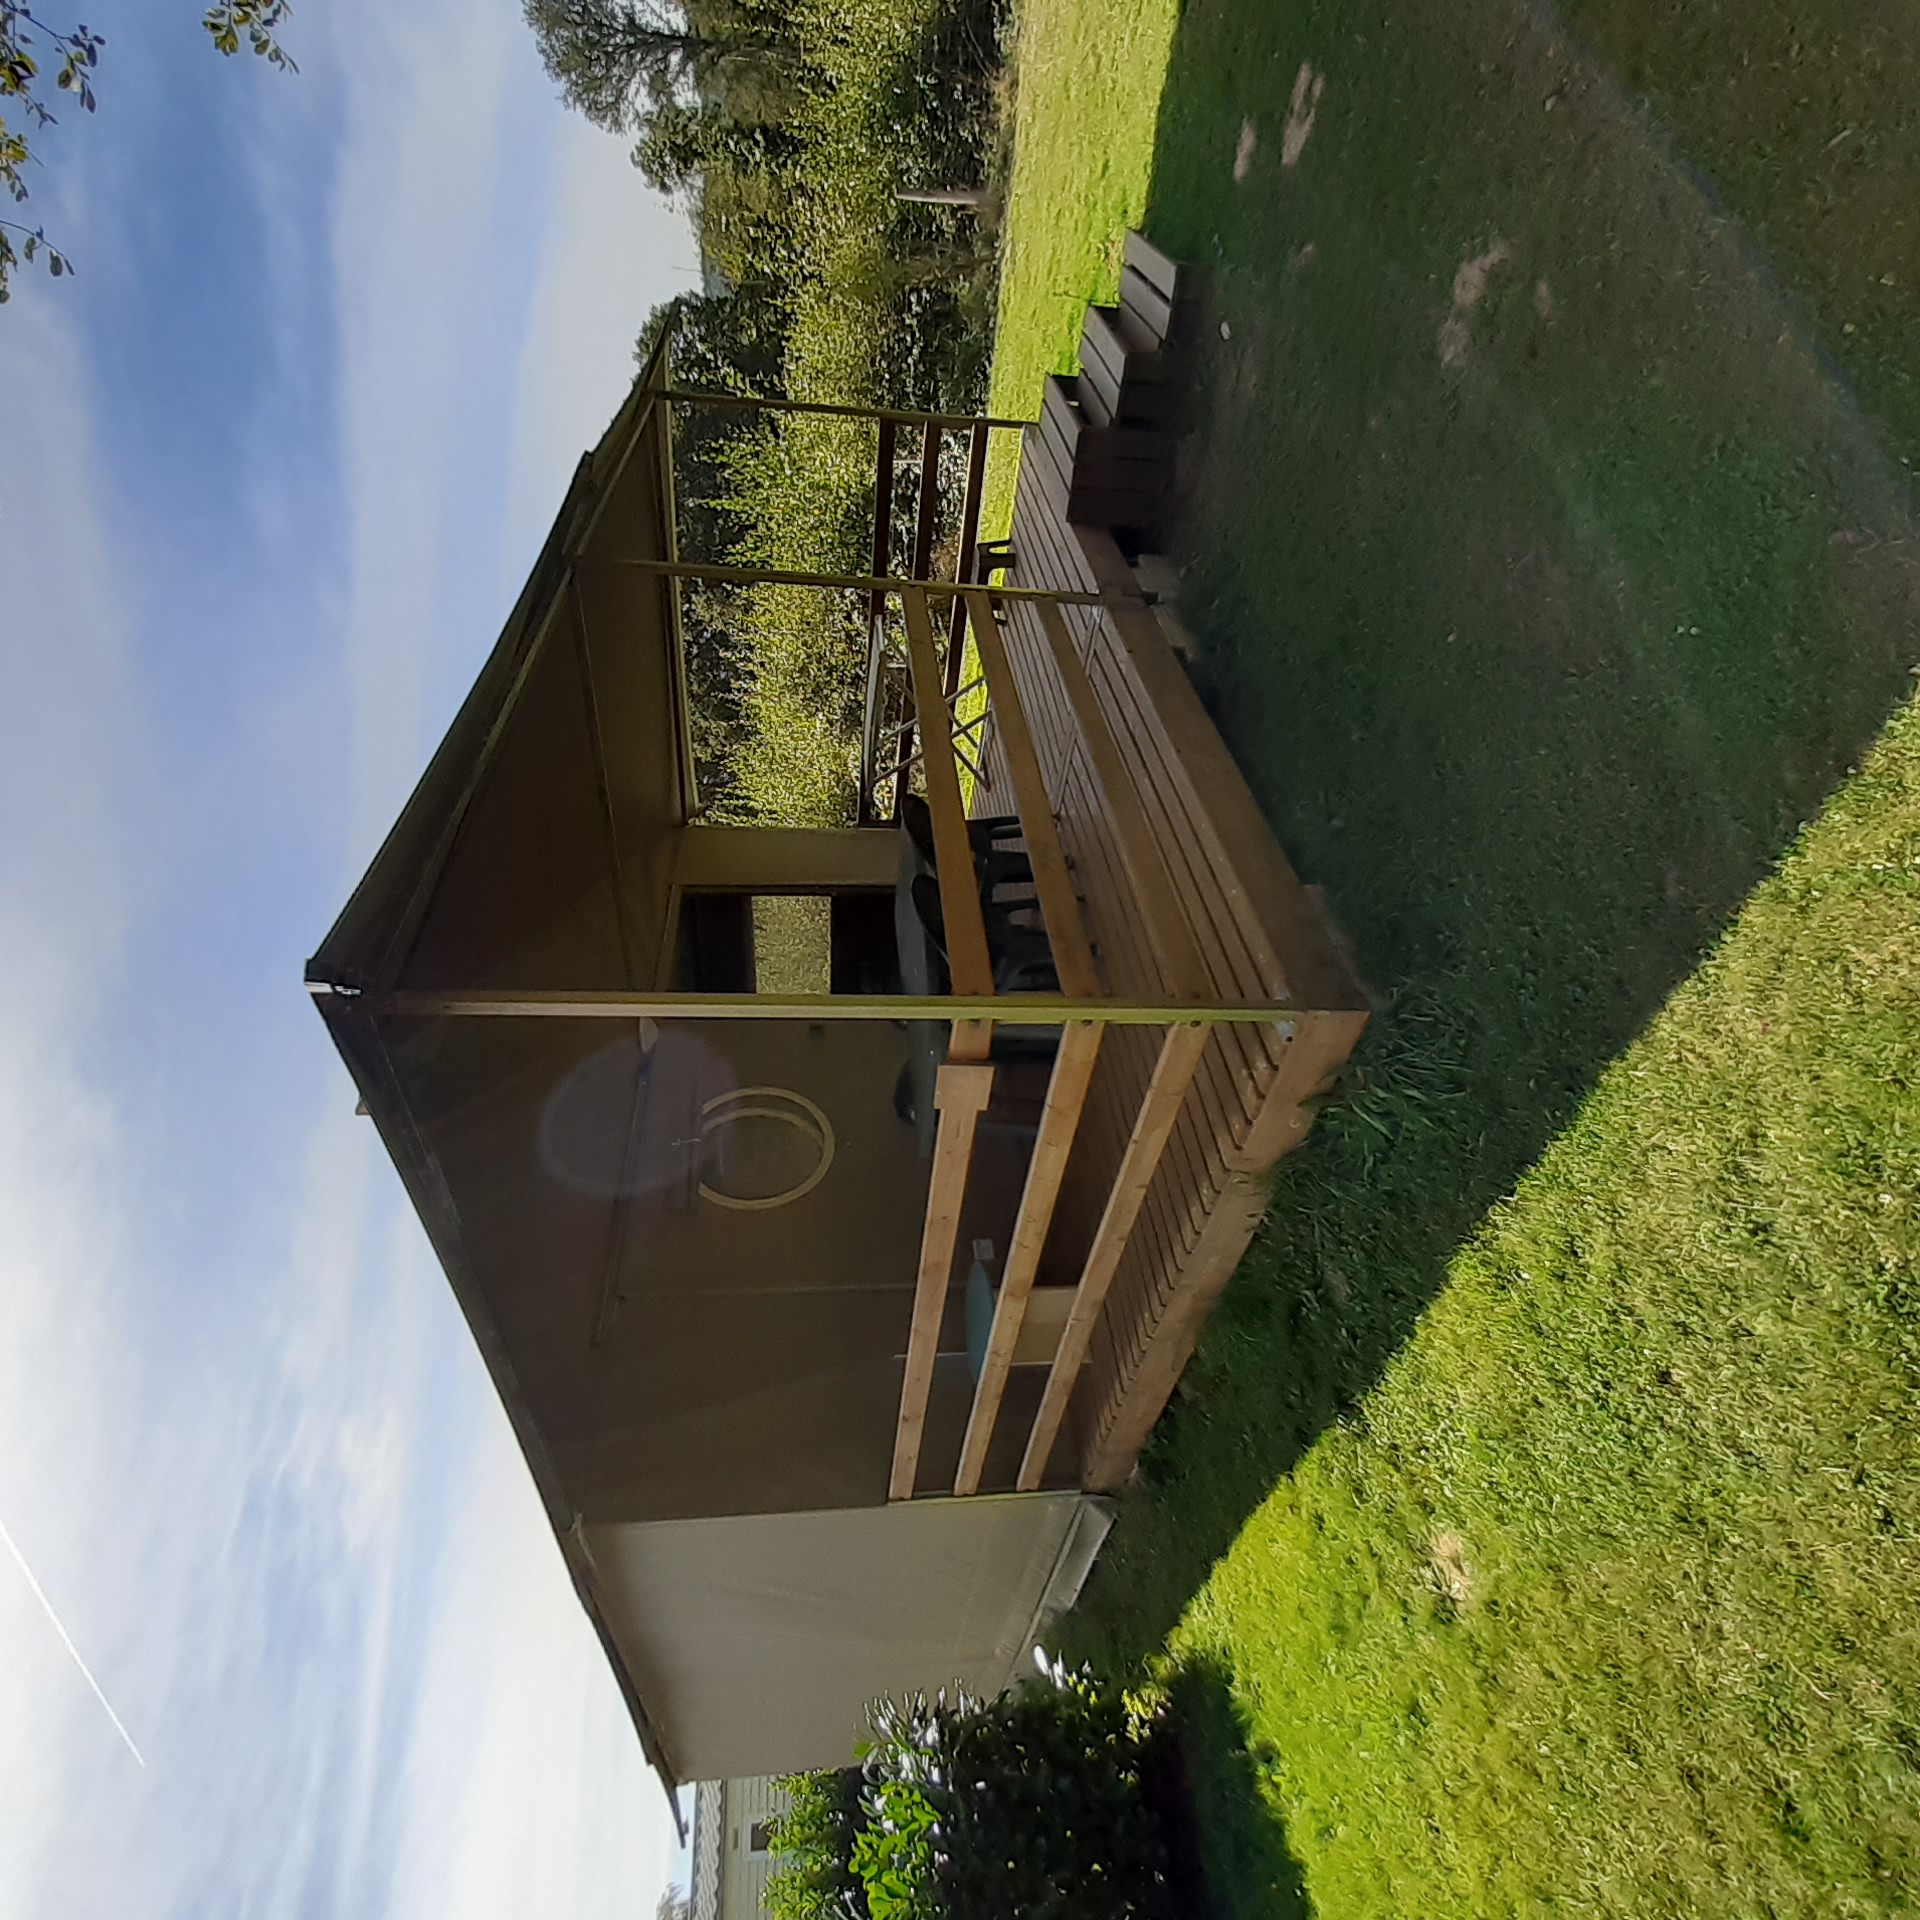 Location - Tente Lodge Confort 25M² + Terrasse Couverte - 2 Chambres - Camping L'Ecrin Nature